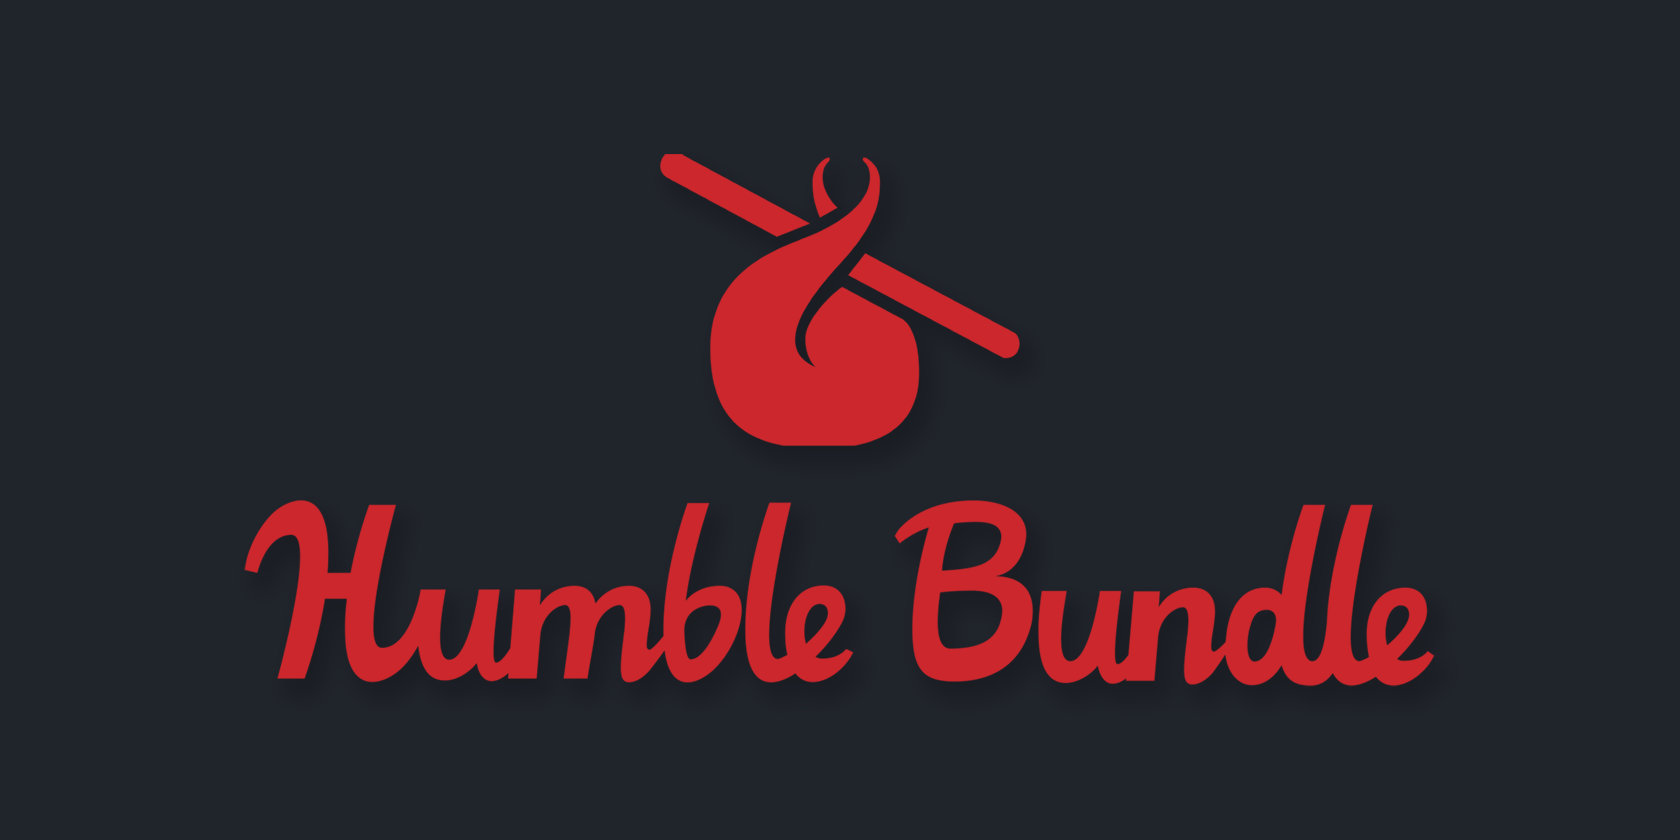 Humble Bundle Unveils $40 Ukraine Benefit With 123 Games and Ebooks - CNET